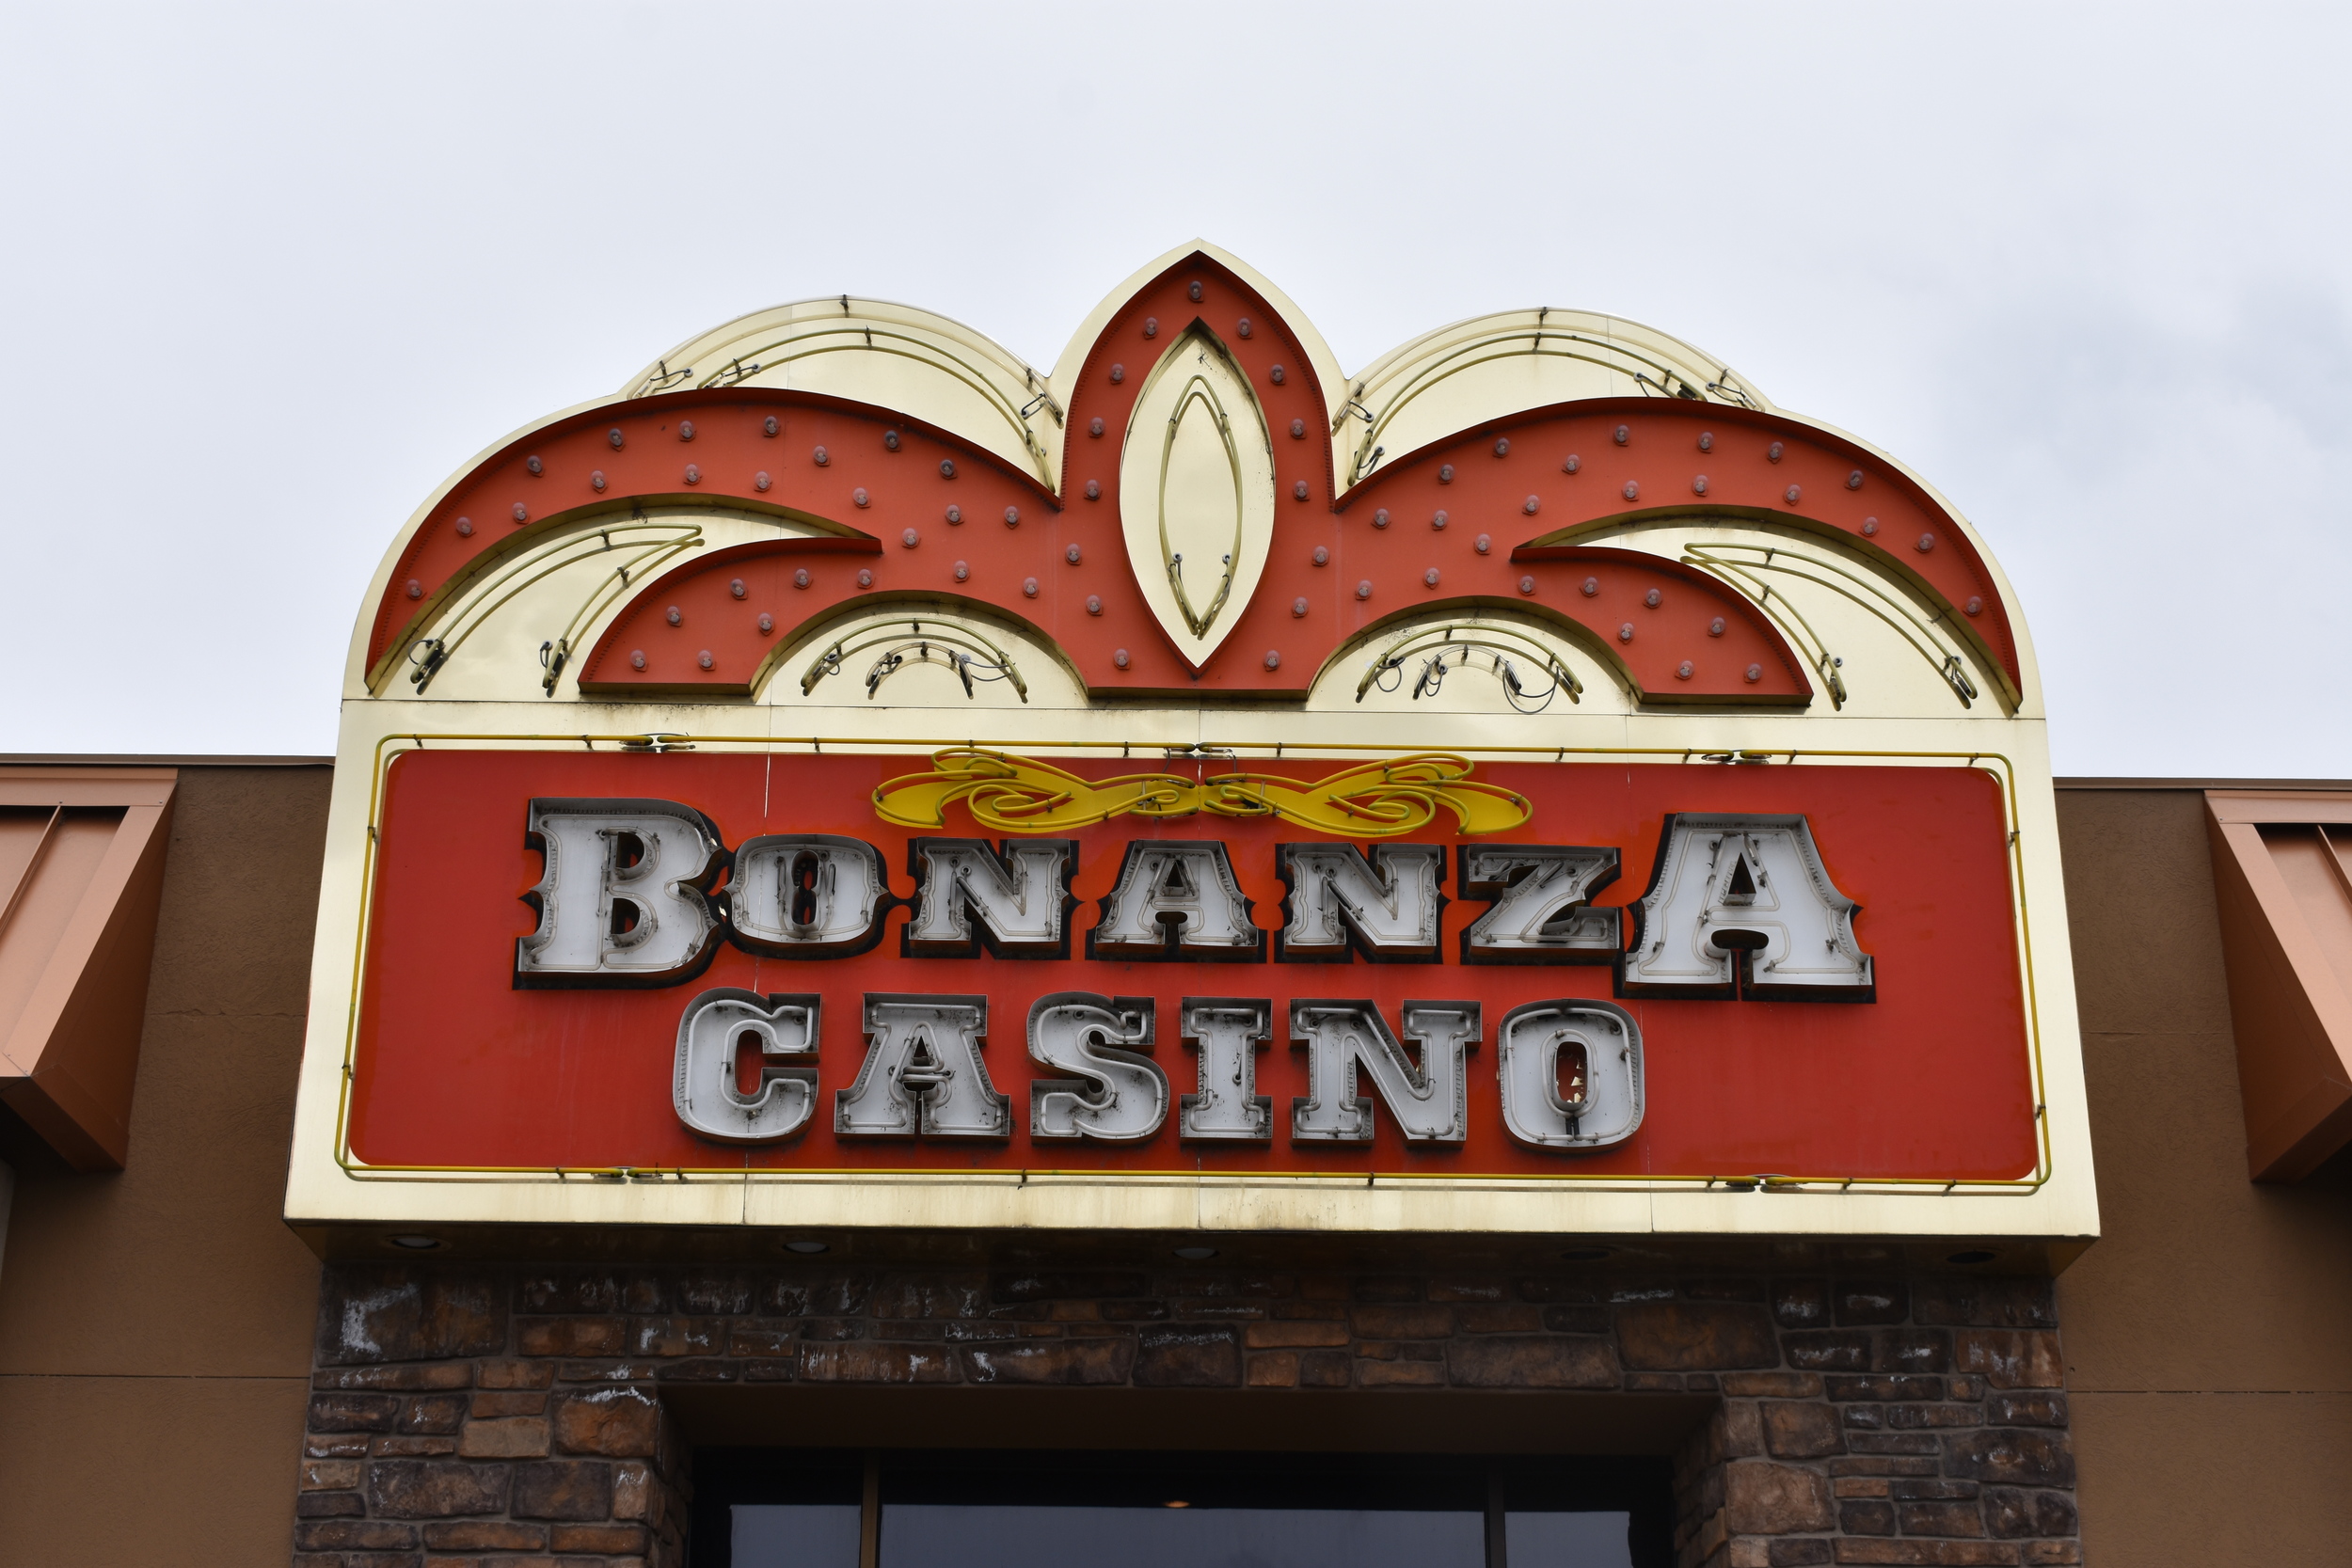 Bonanza Casino wall mounted sign, Fallon, Nevada